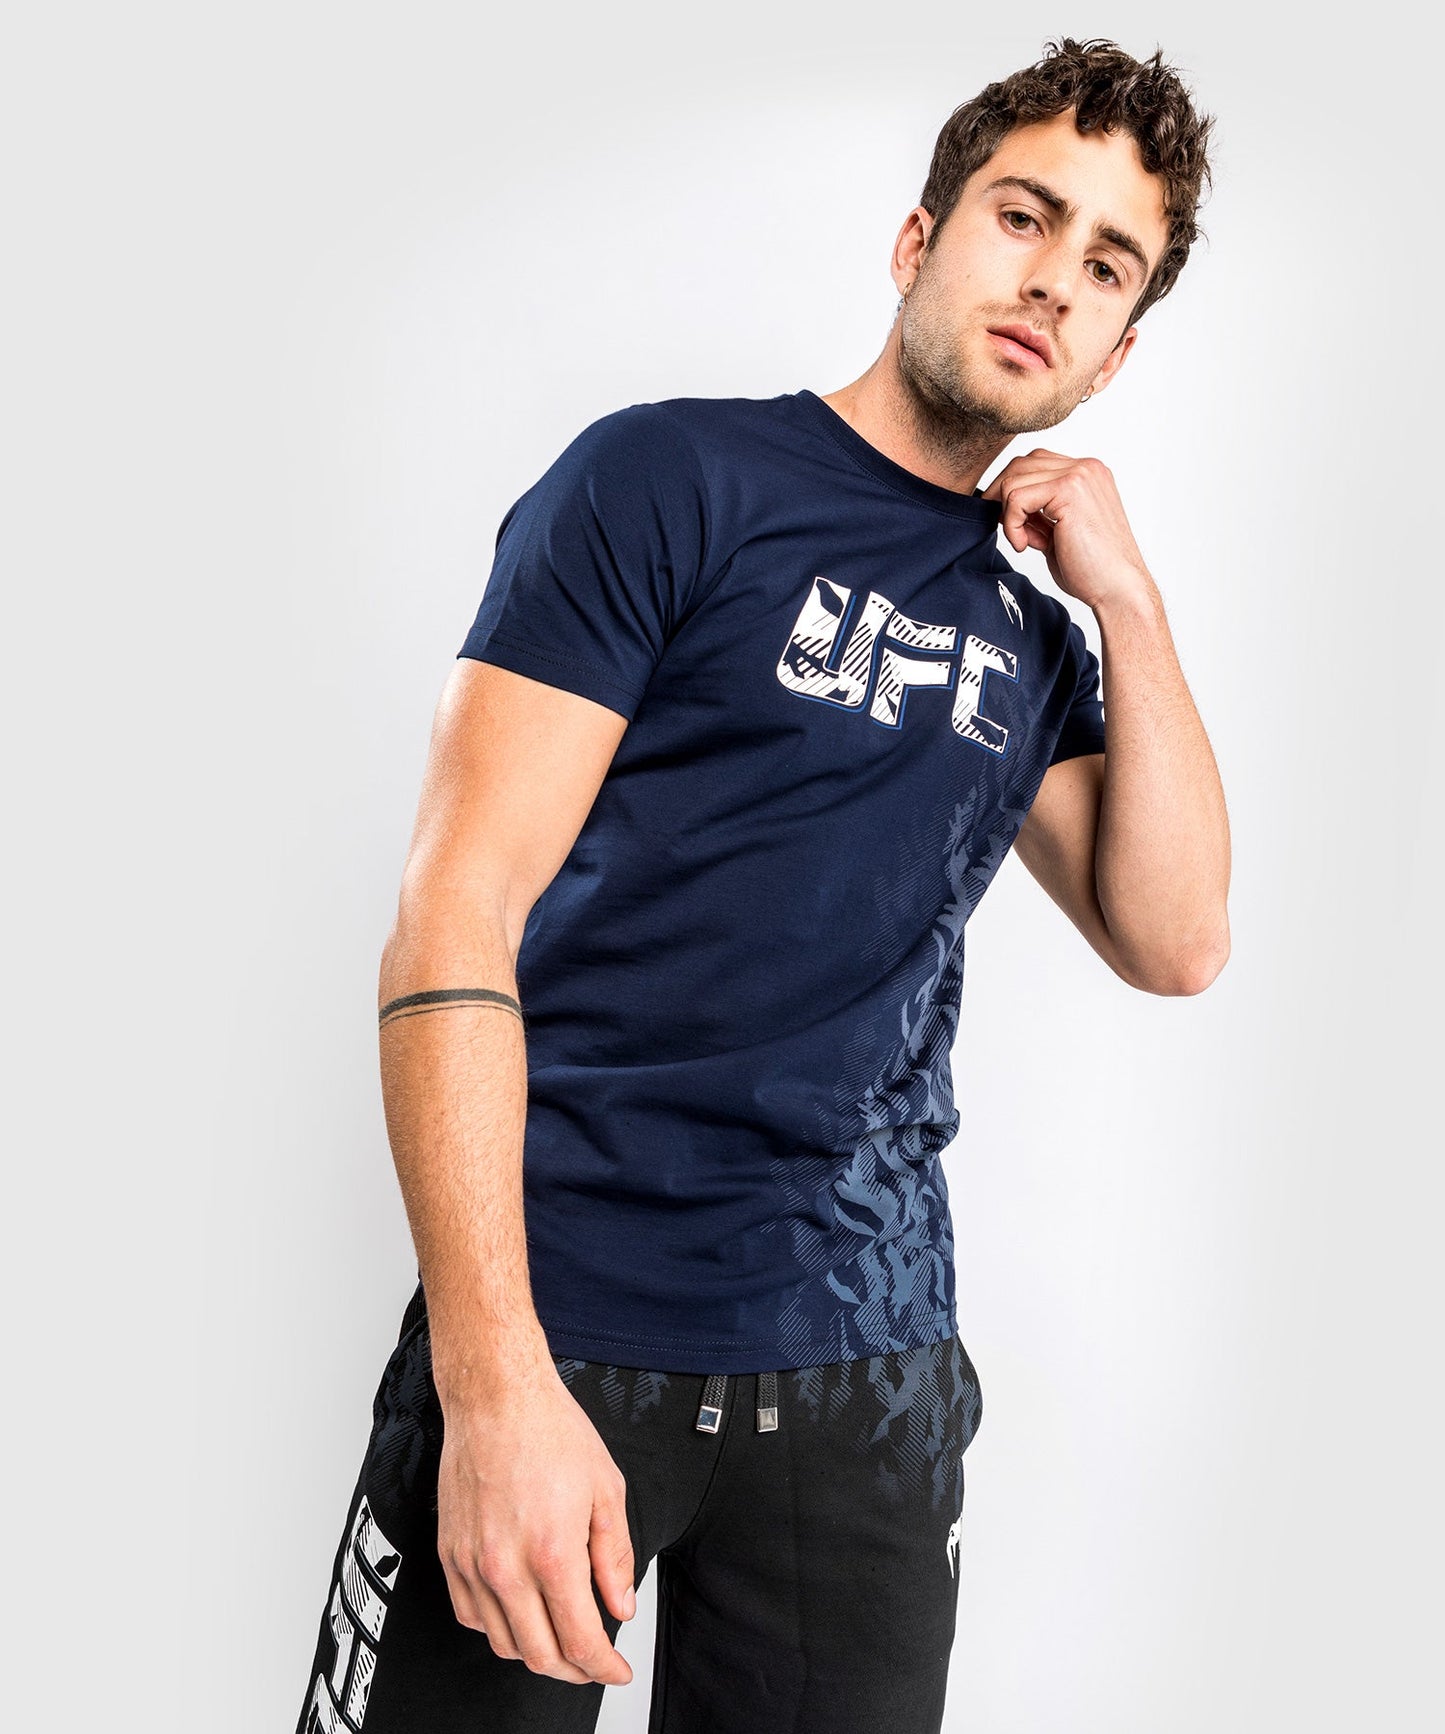 UFC Venum Authentic Fight Week Men's Short Sleeve T-shirt - Navy Blue